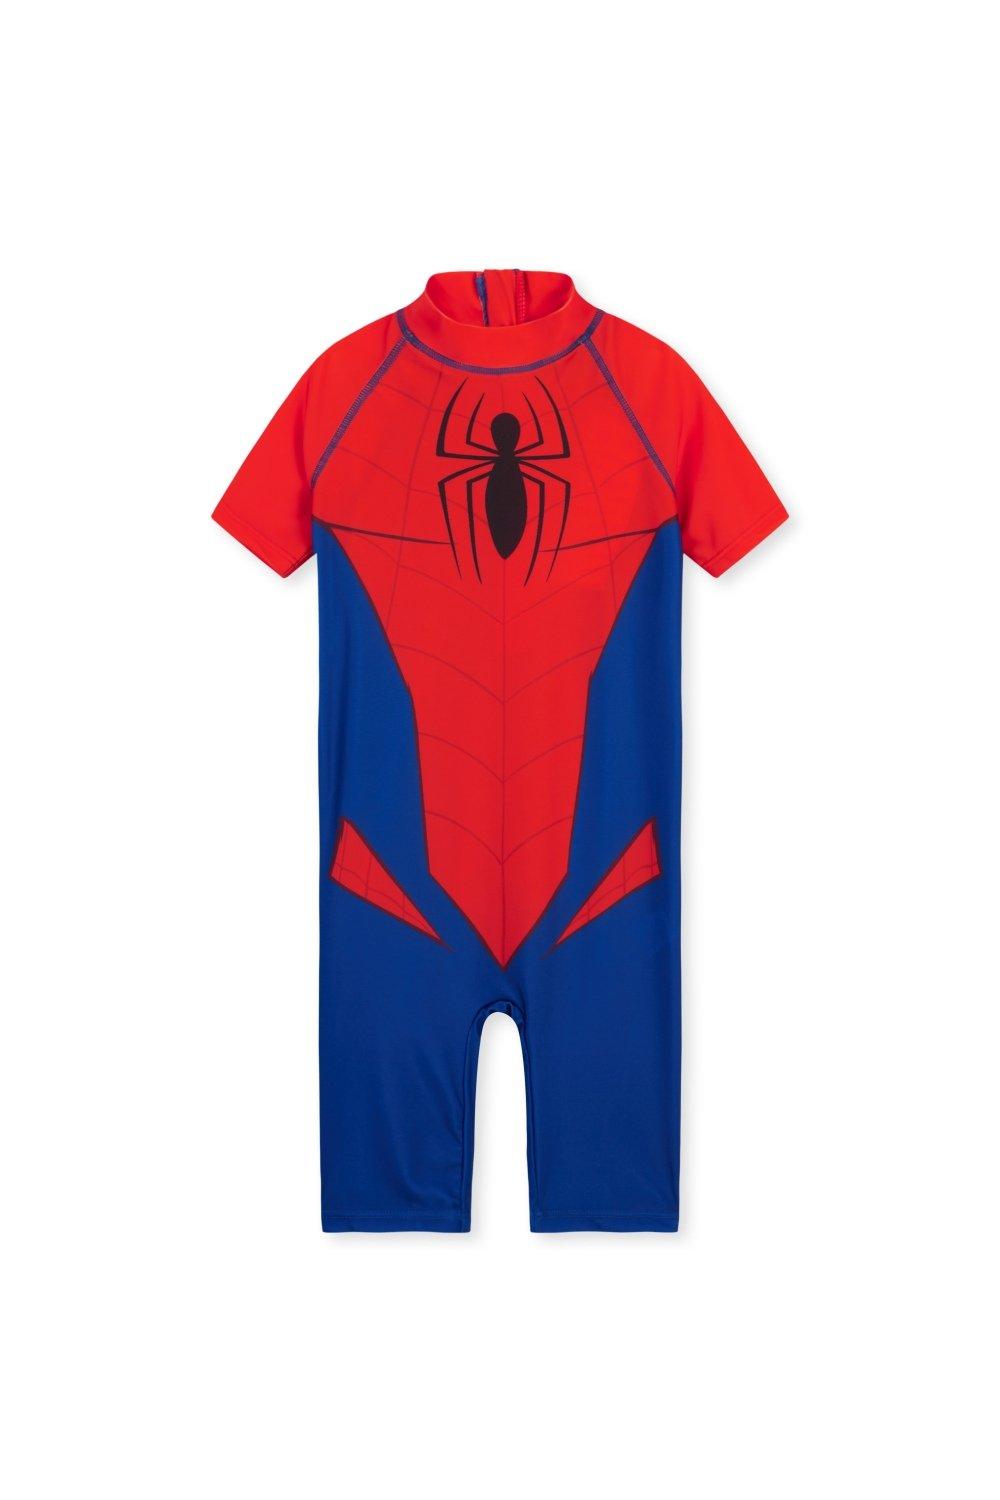 Spiderman Swimsuit Short Sleeve